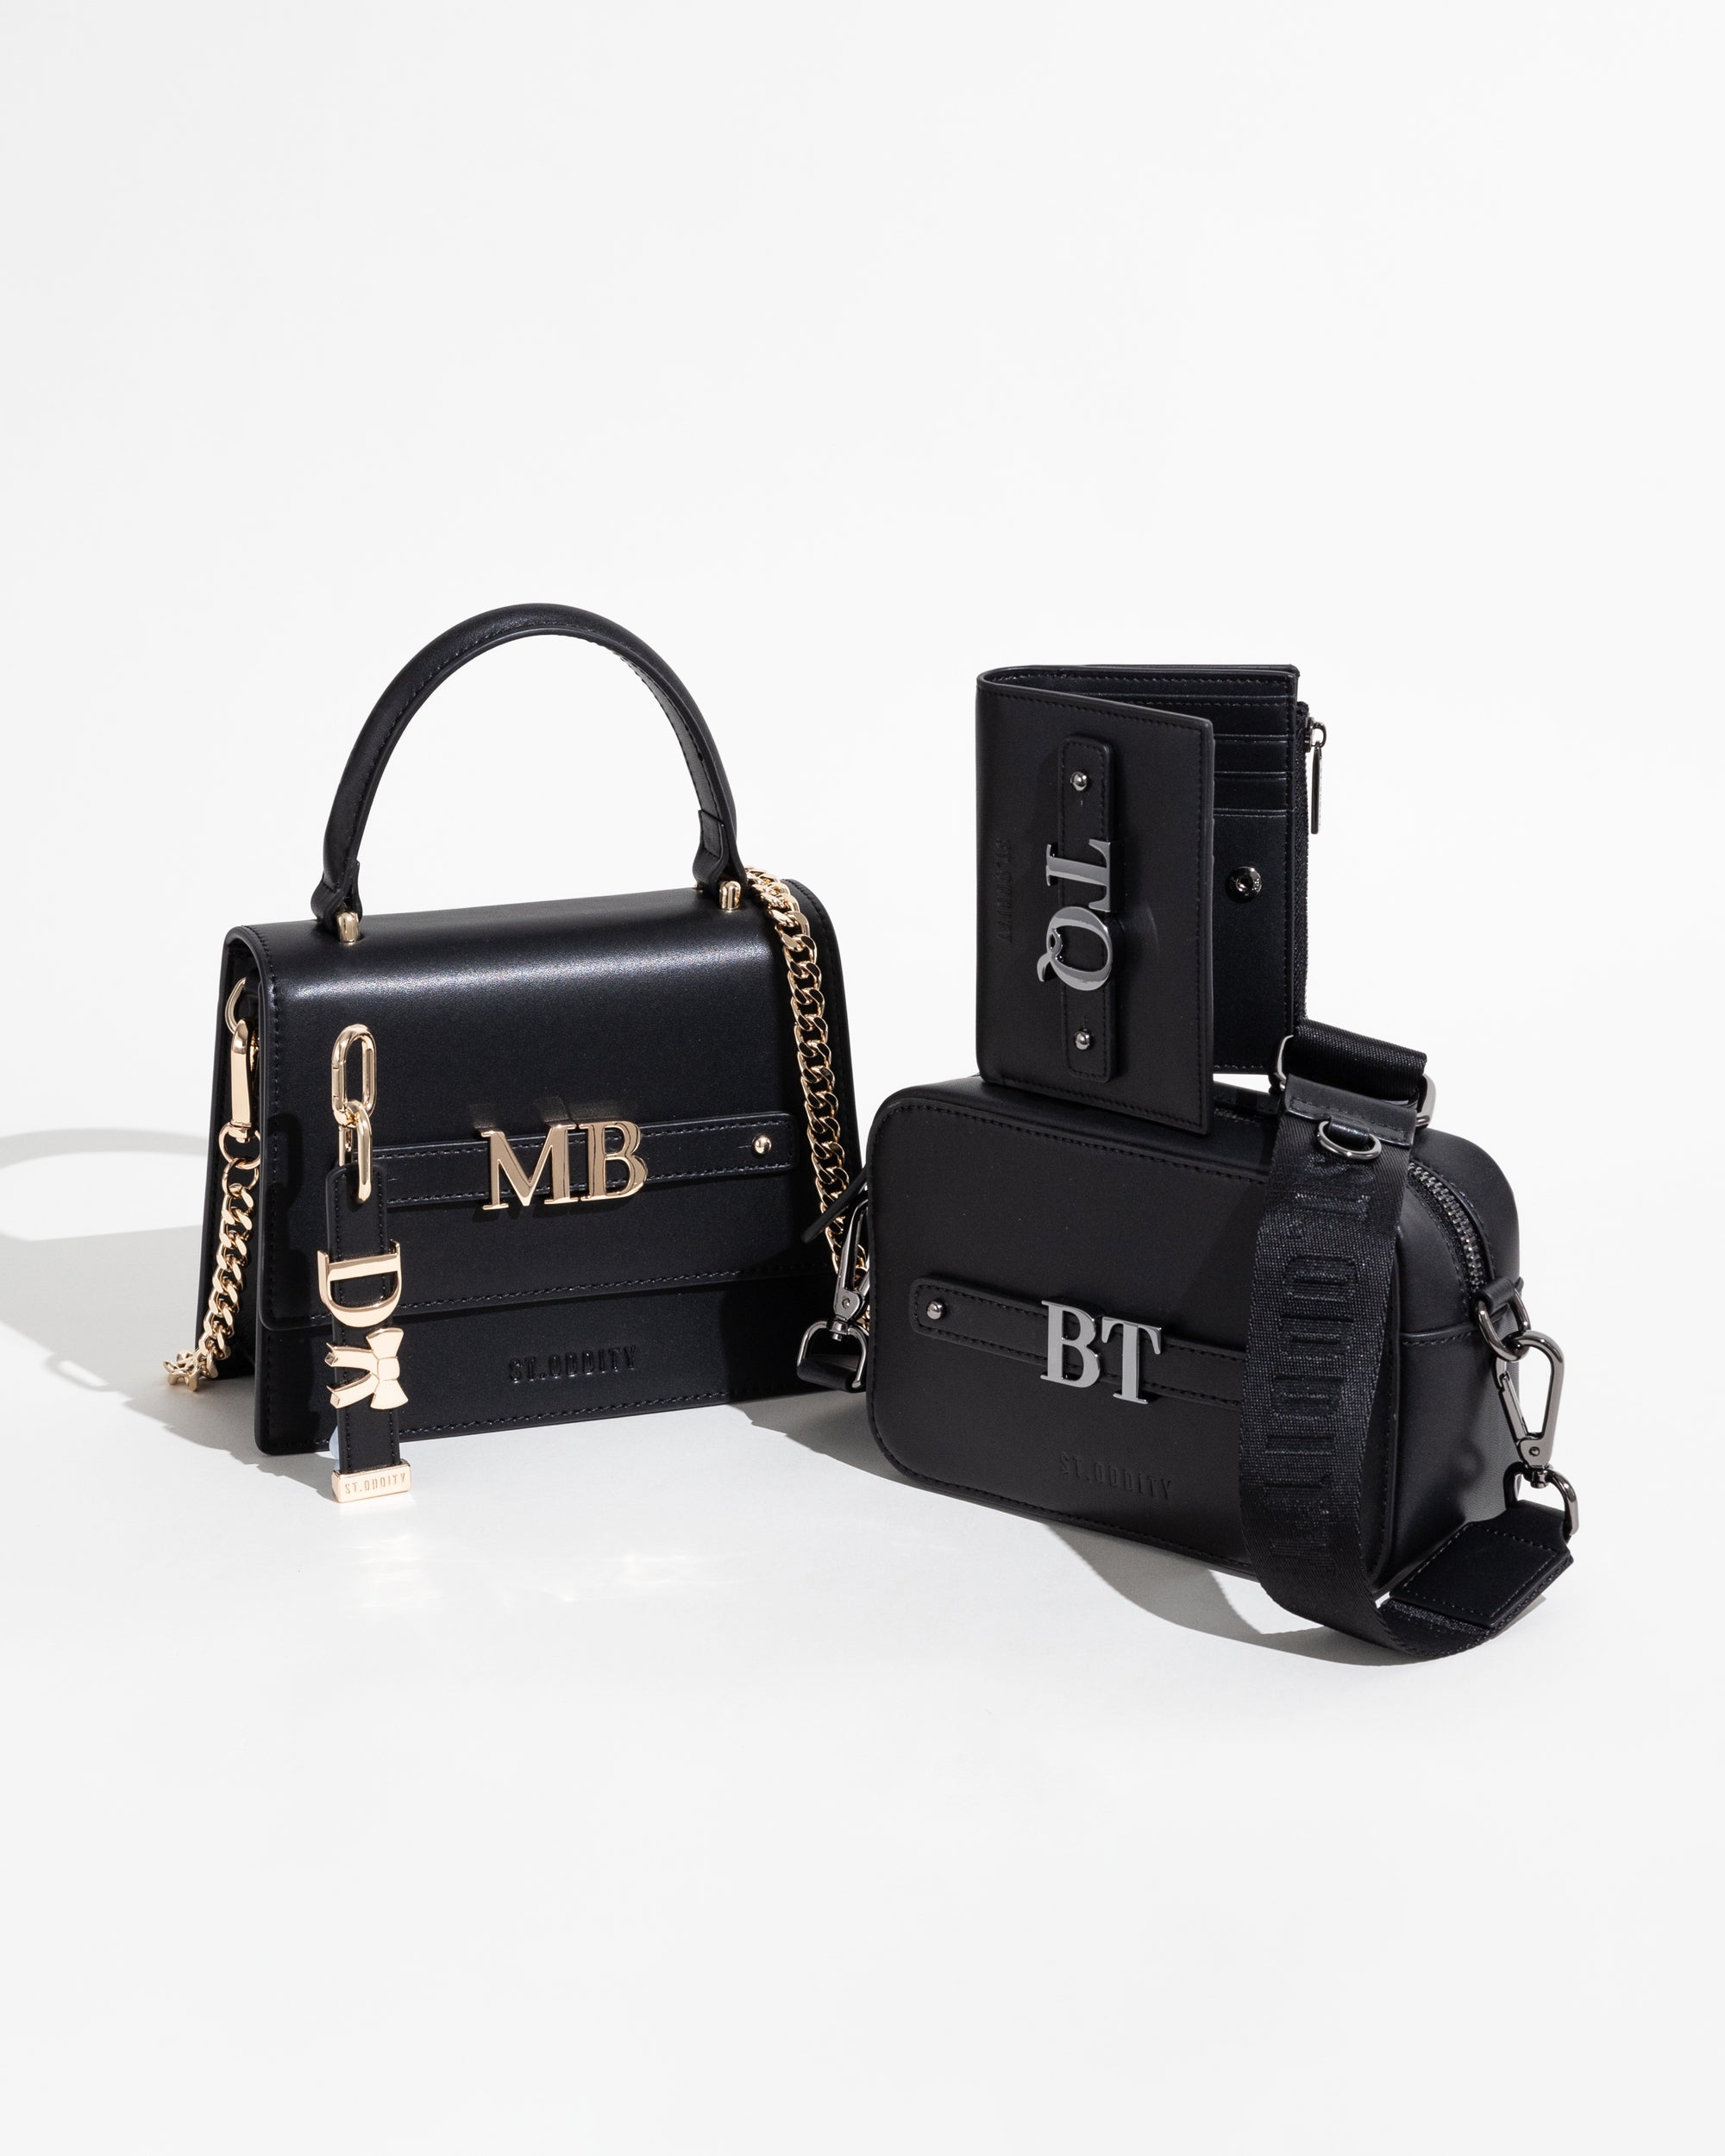 Zip Crossbody Bag in Black/Gunmetal with Personalised Hardware